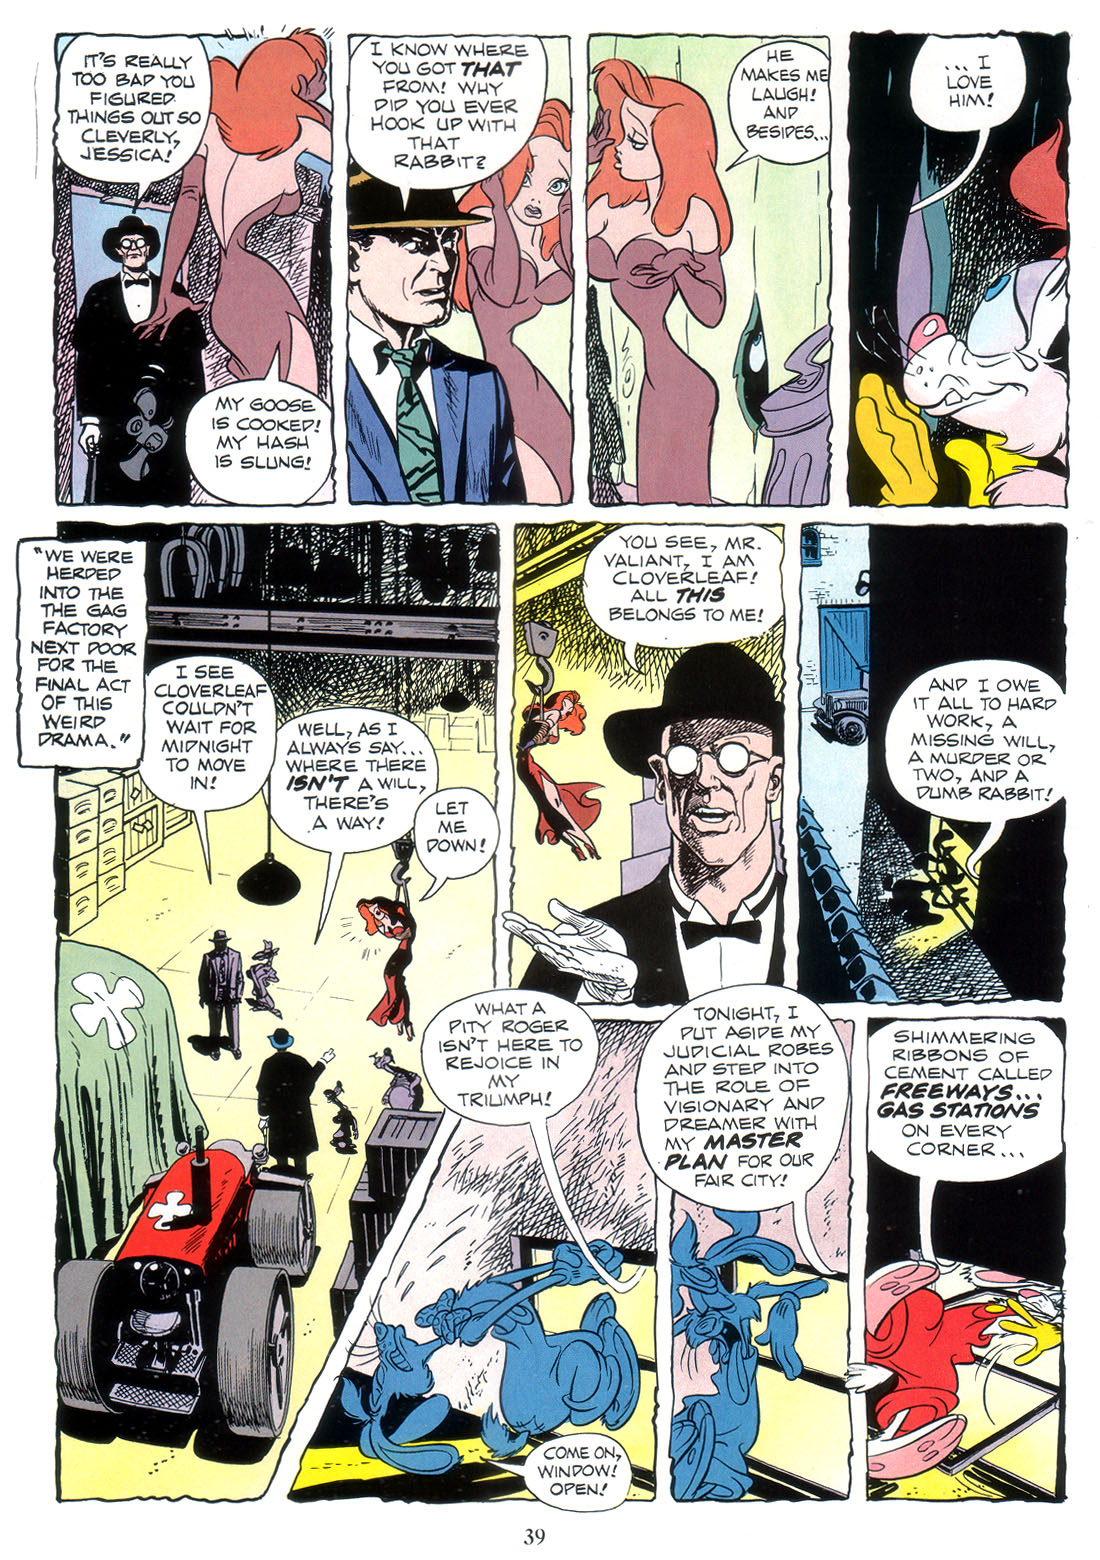 Marvel Graphic Novel issue 41 - Who Framed Roger Rabbit - Page 41